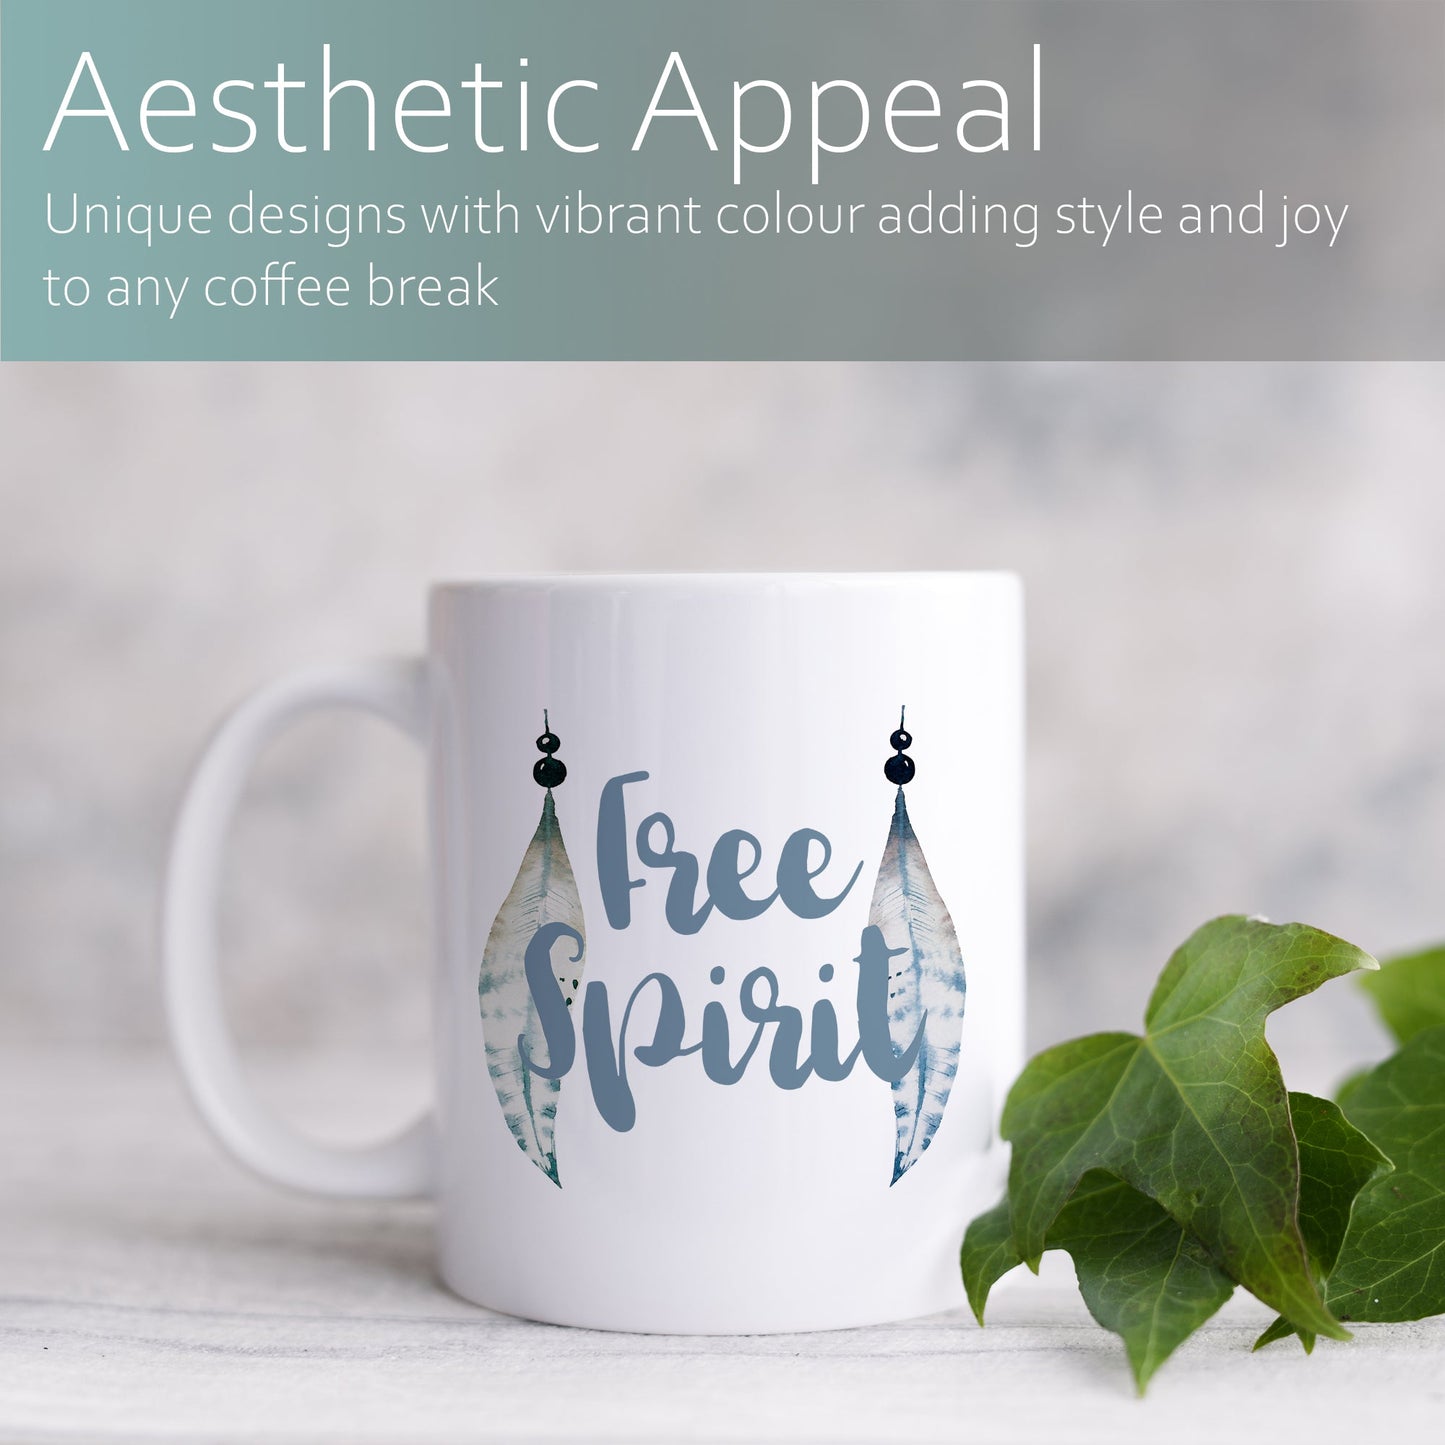 Free spirit | Ceramic mug-Ceramic mug-Adnil Creations